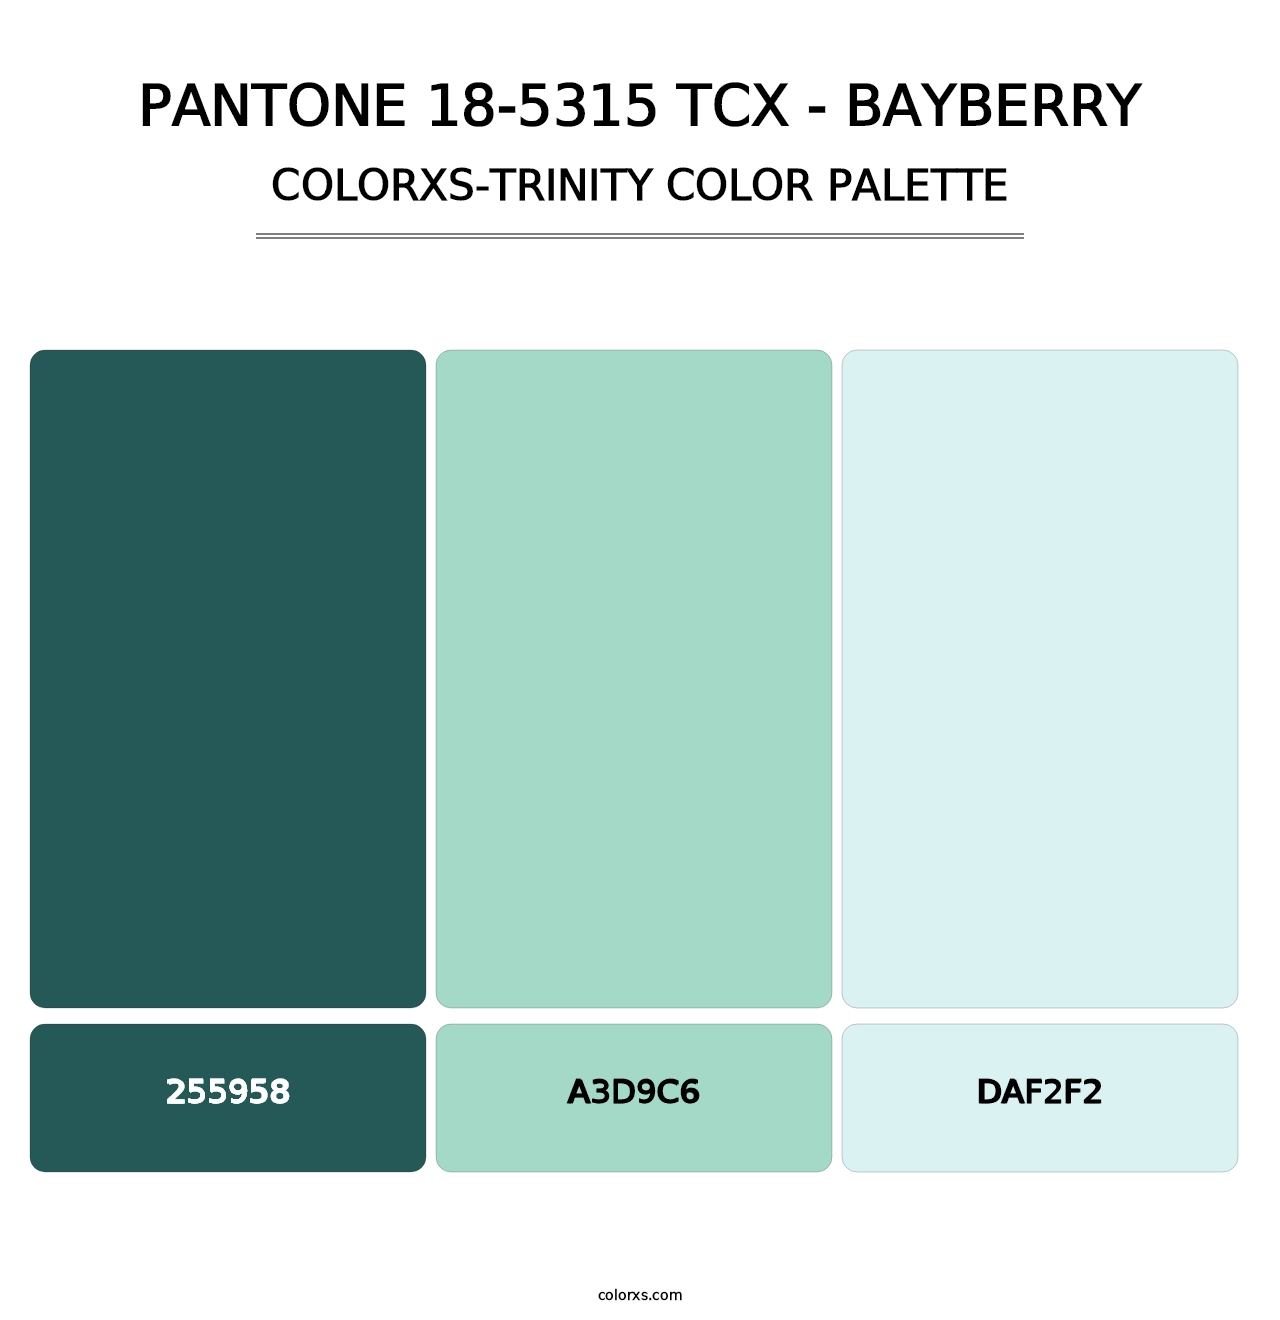 PANTONE 18-5315 TCX - Bayberry - Colorxs Trinity Palette